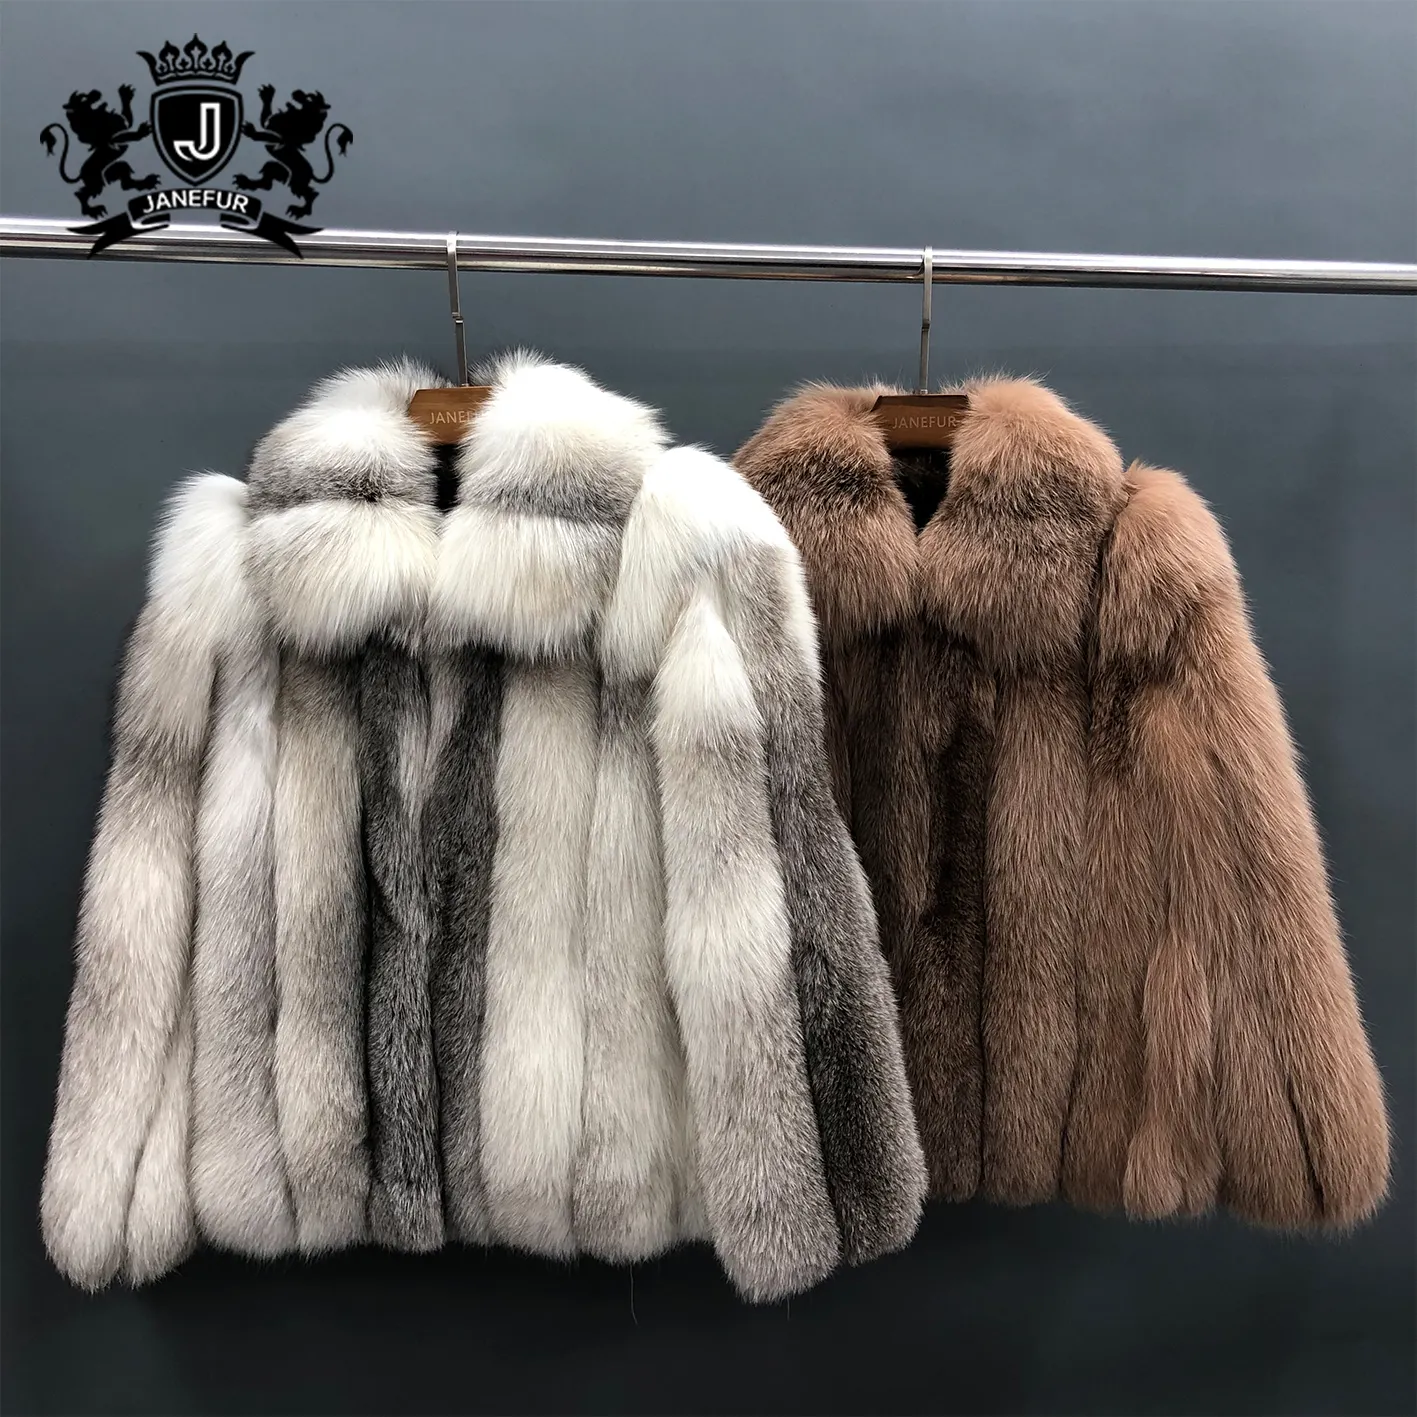 Janefur Man Fox Coat Top Selling Heavy Real Cross Fox Mens Fur Coats Long Men Black Winter Outfit Clothing